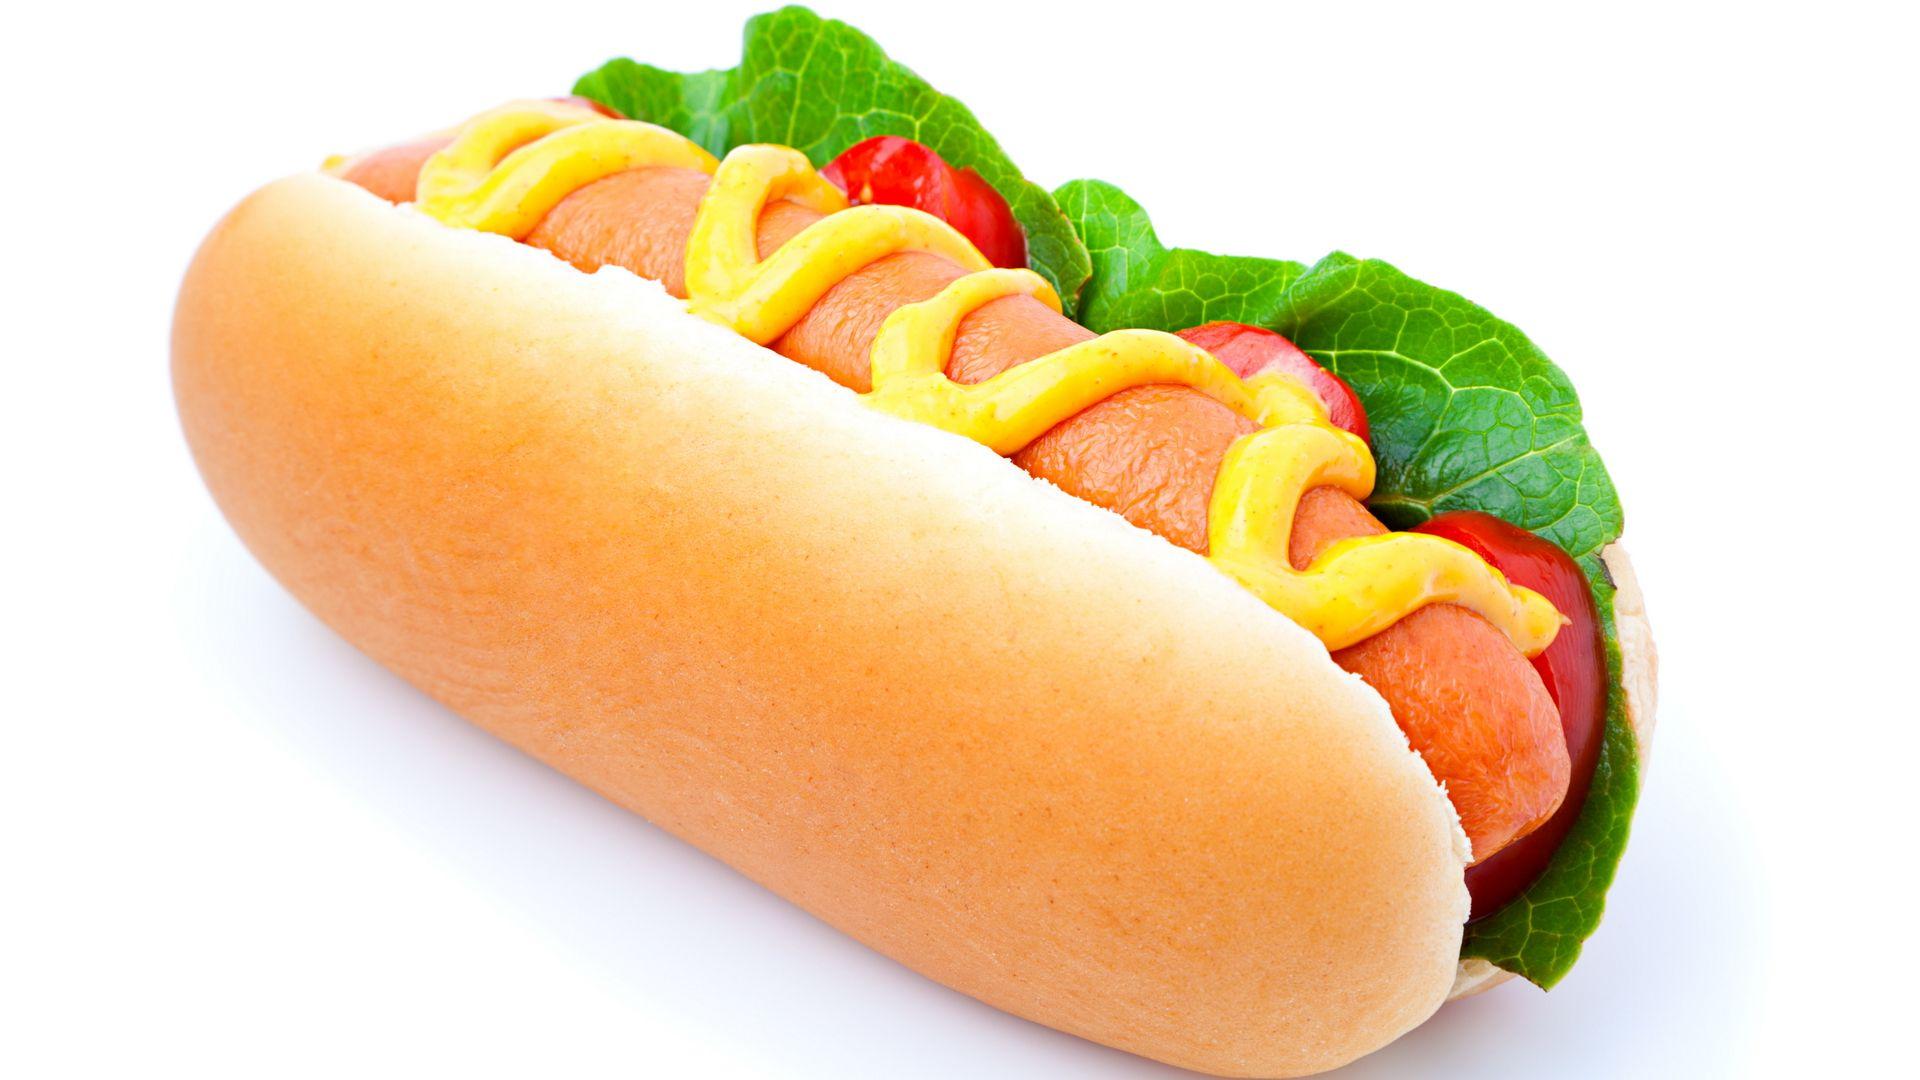 Hot Dog Wallpaper, 37 Best HD Image of Hot Dog, High Quality Hot